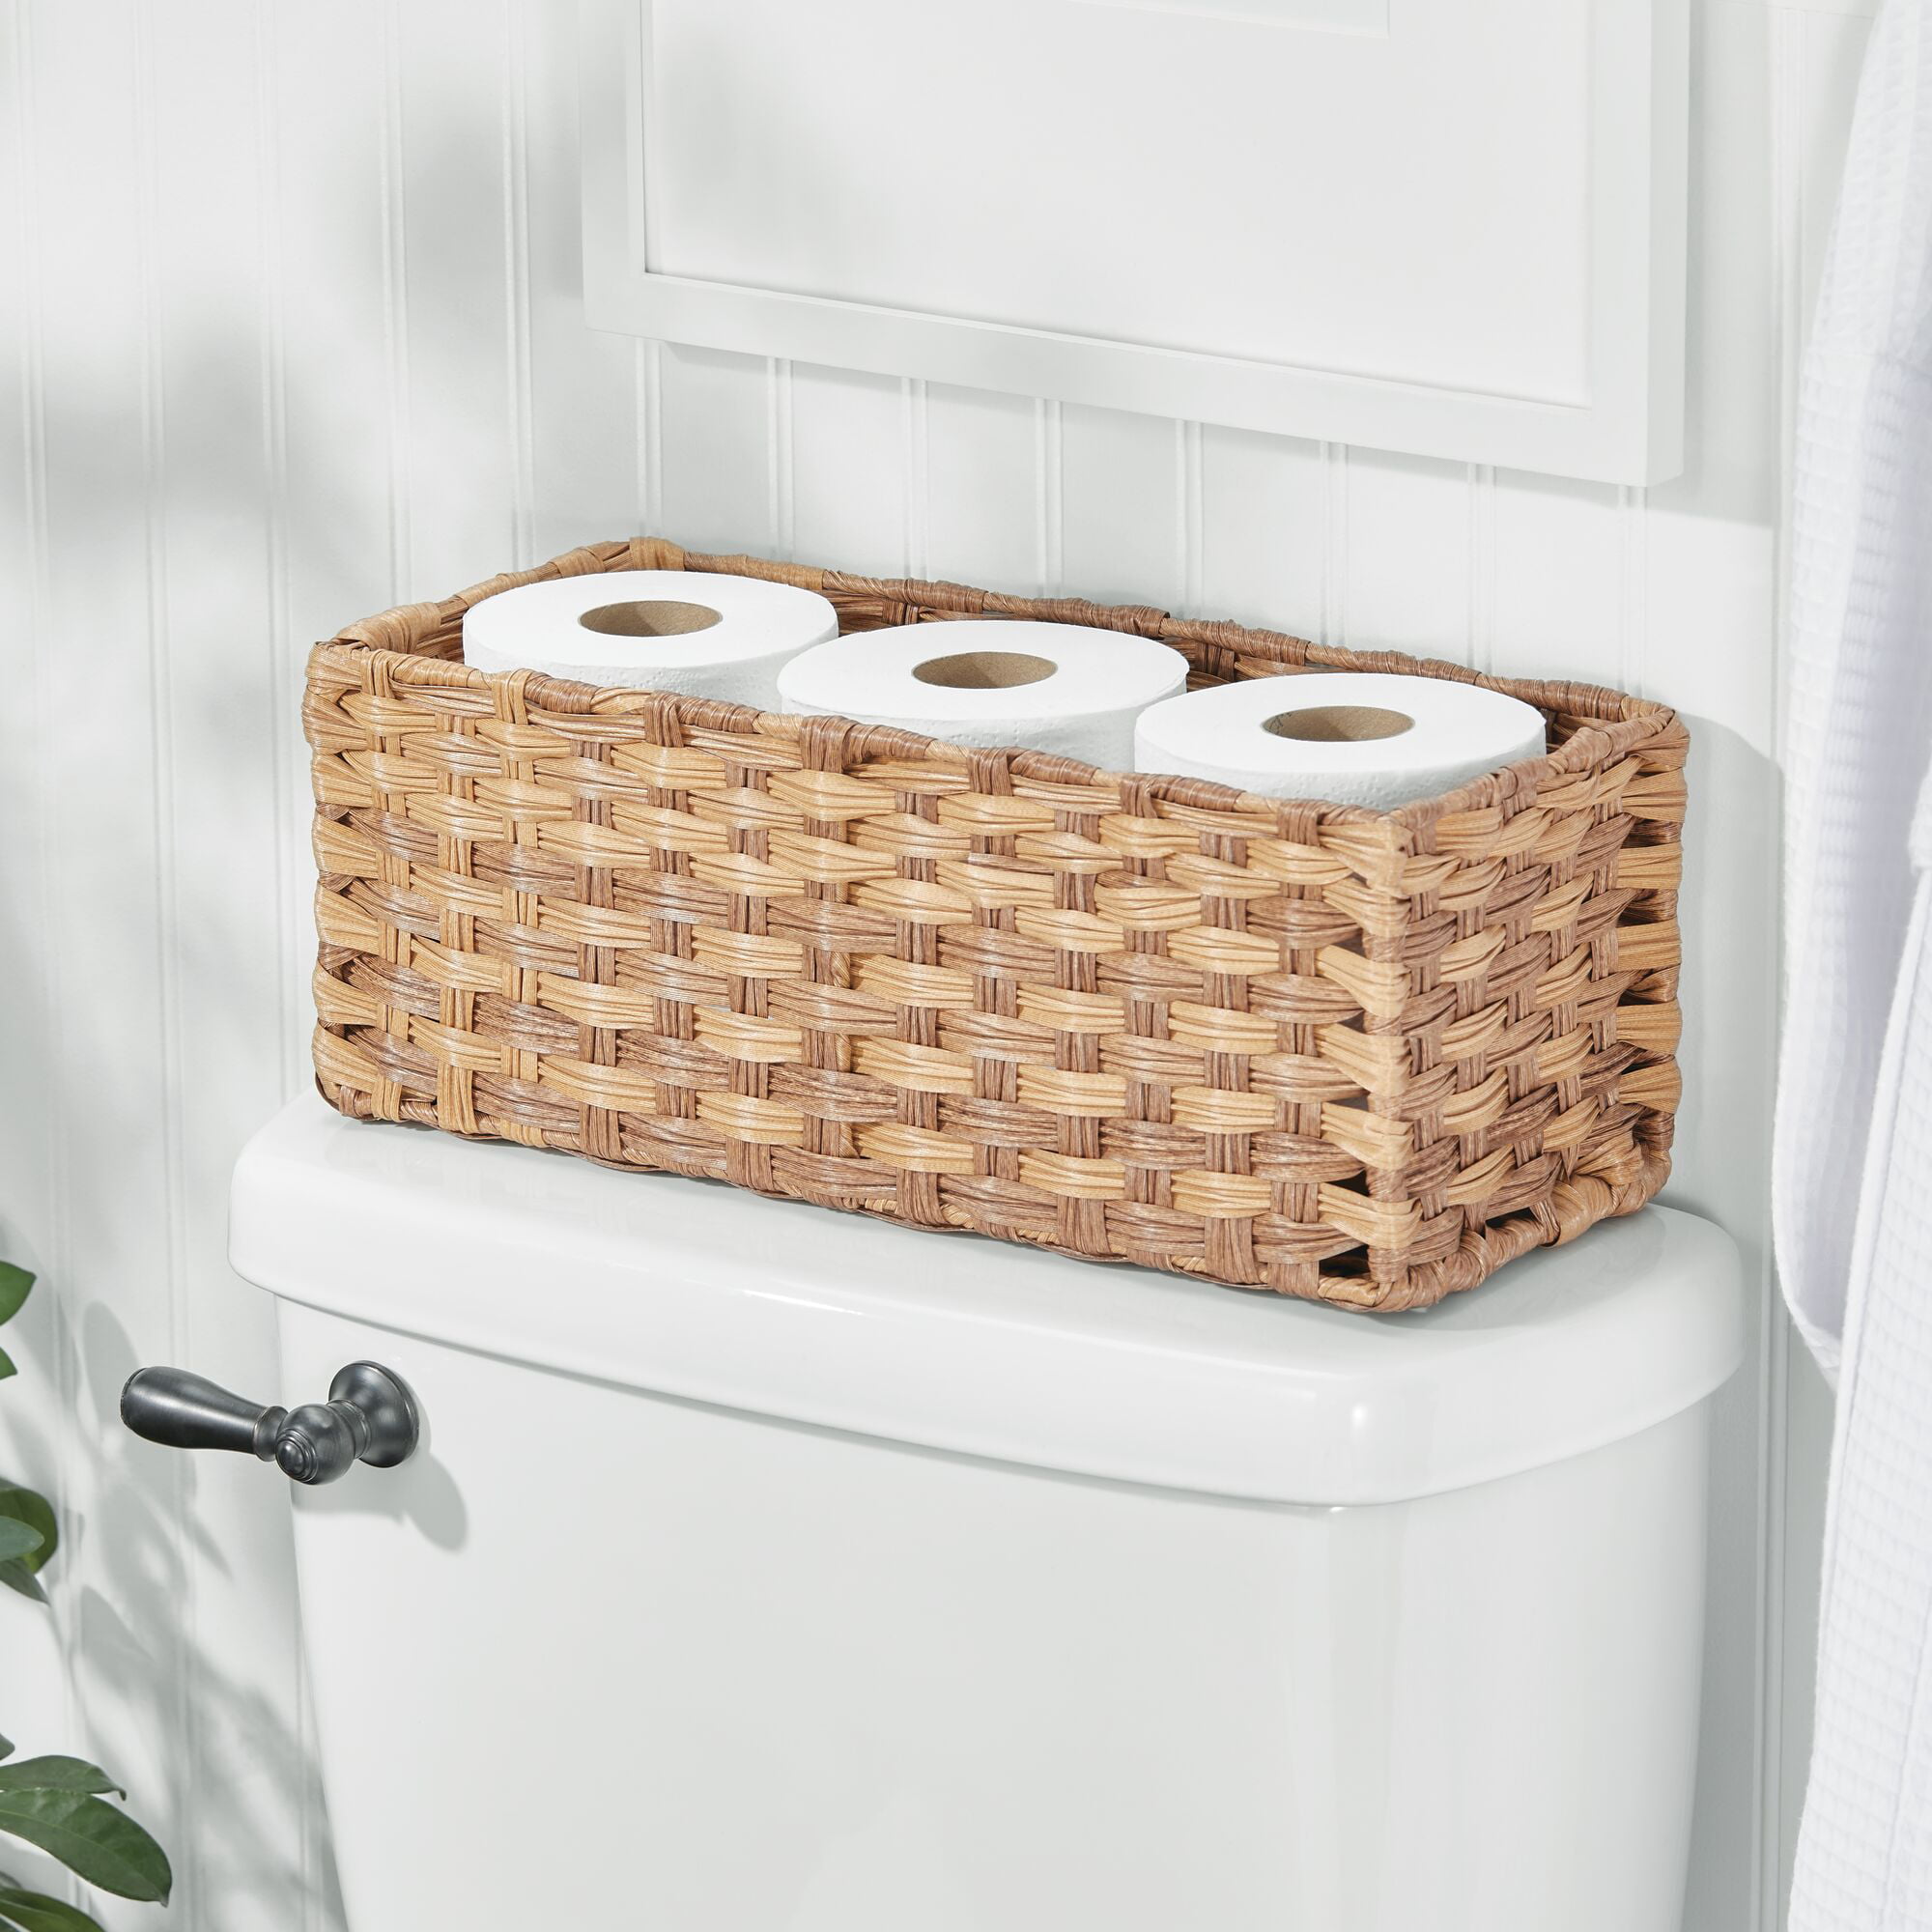 mDesign Woven Hyacinth Narrow Bathroom Toilet Roll Holder Storage Organizer  Basket Bin - Rectangle Containers for Bathroom, Toilet Tank - Hold 3 Rolls  of Toilet Paper - Gray 1 Gray